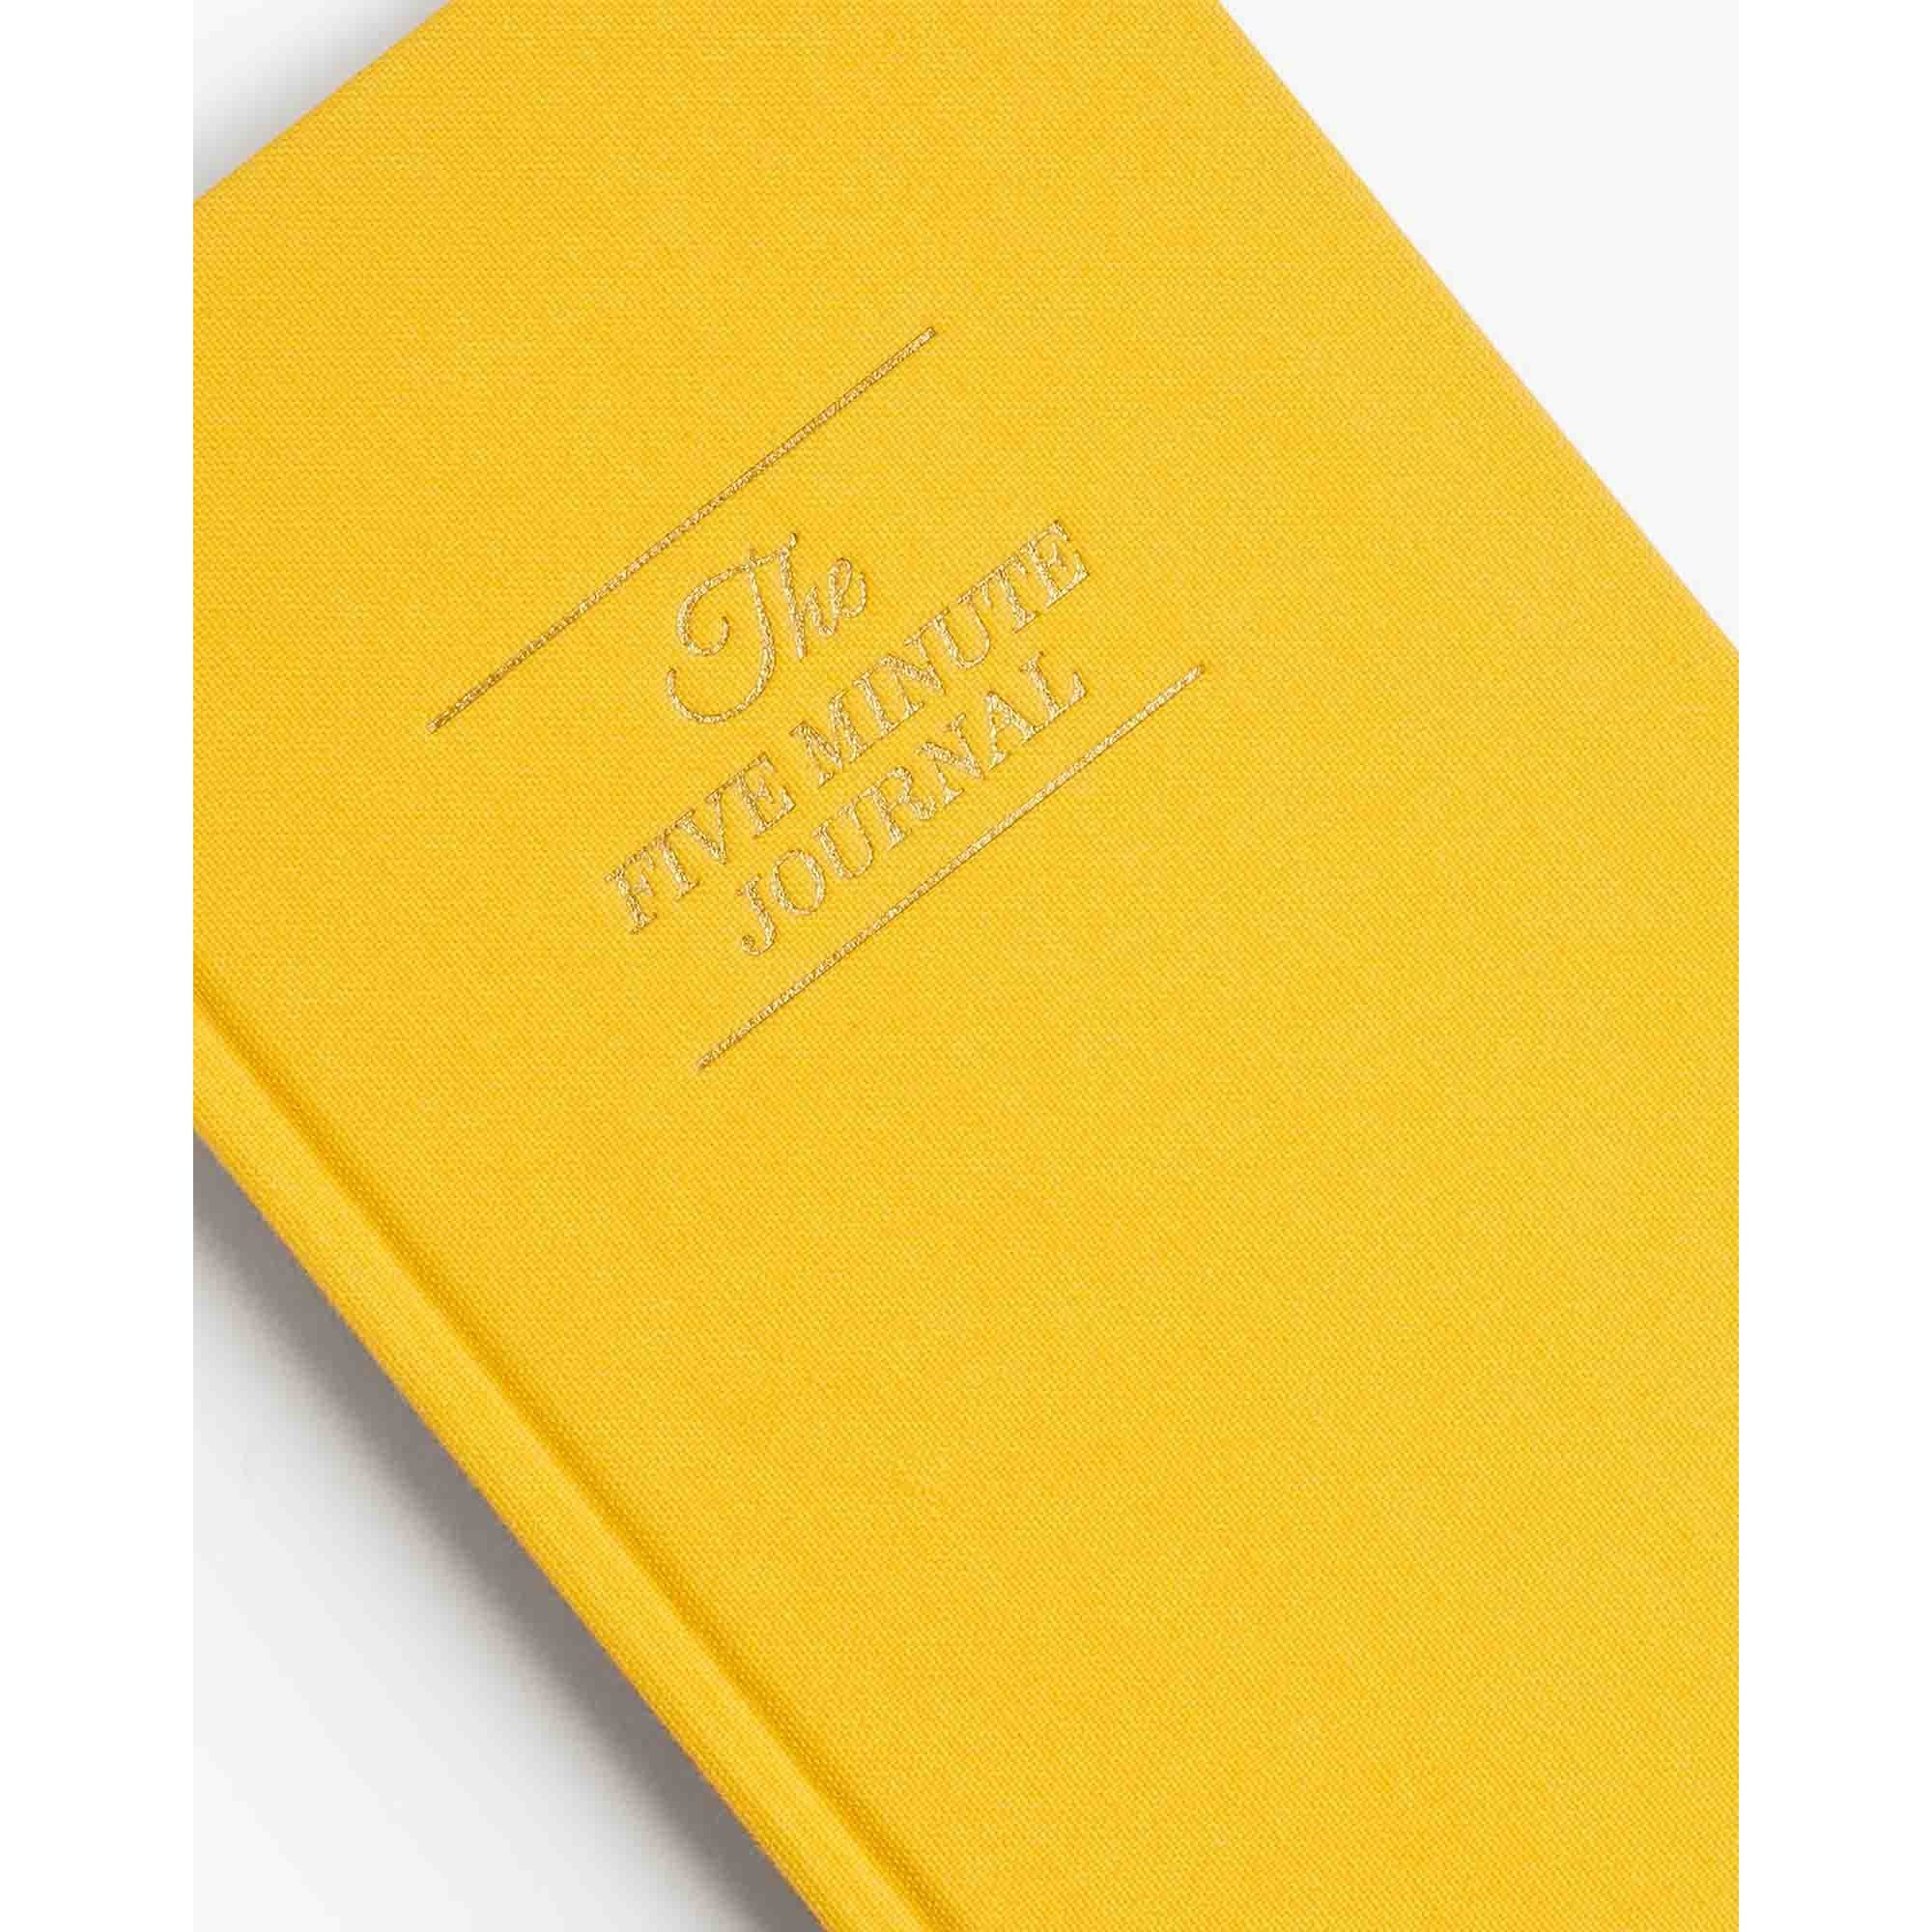 The Five Minute Journal - Sunshine Yellow Edition - Karma Kiss